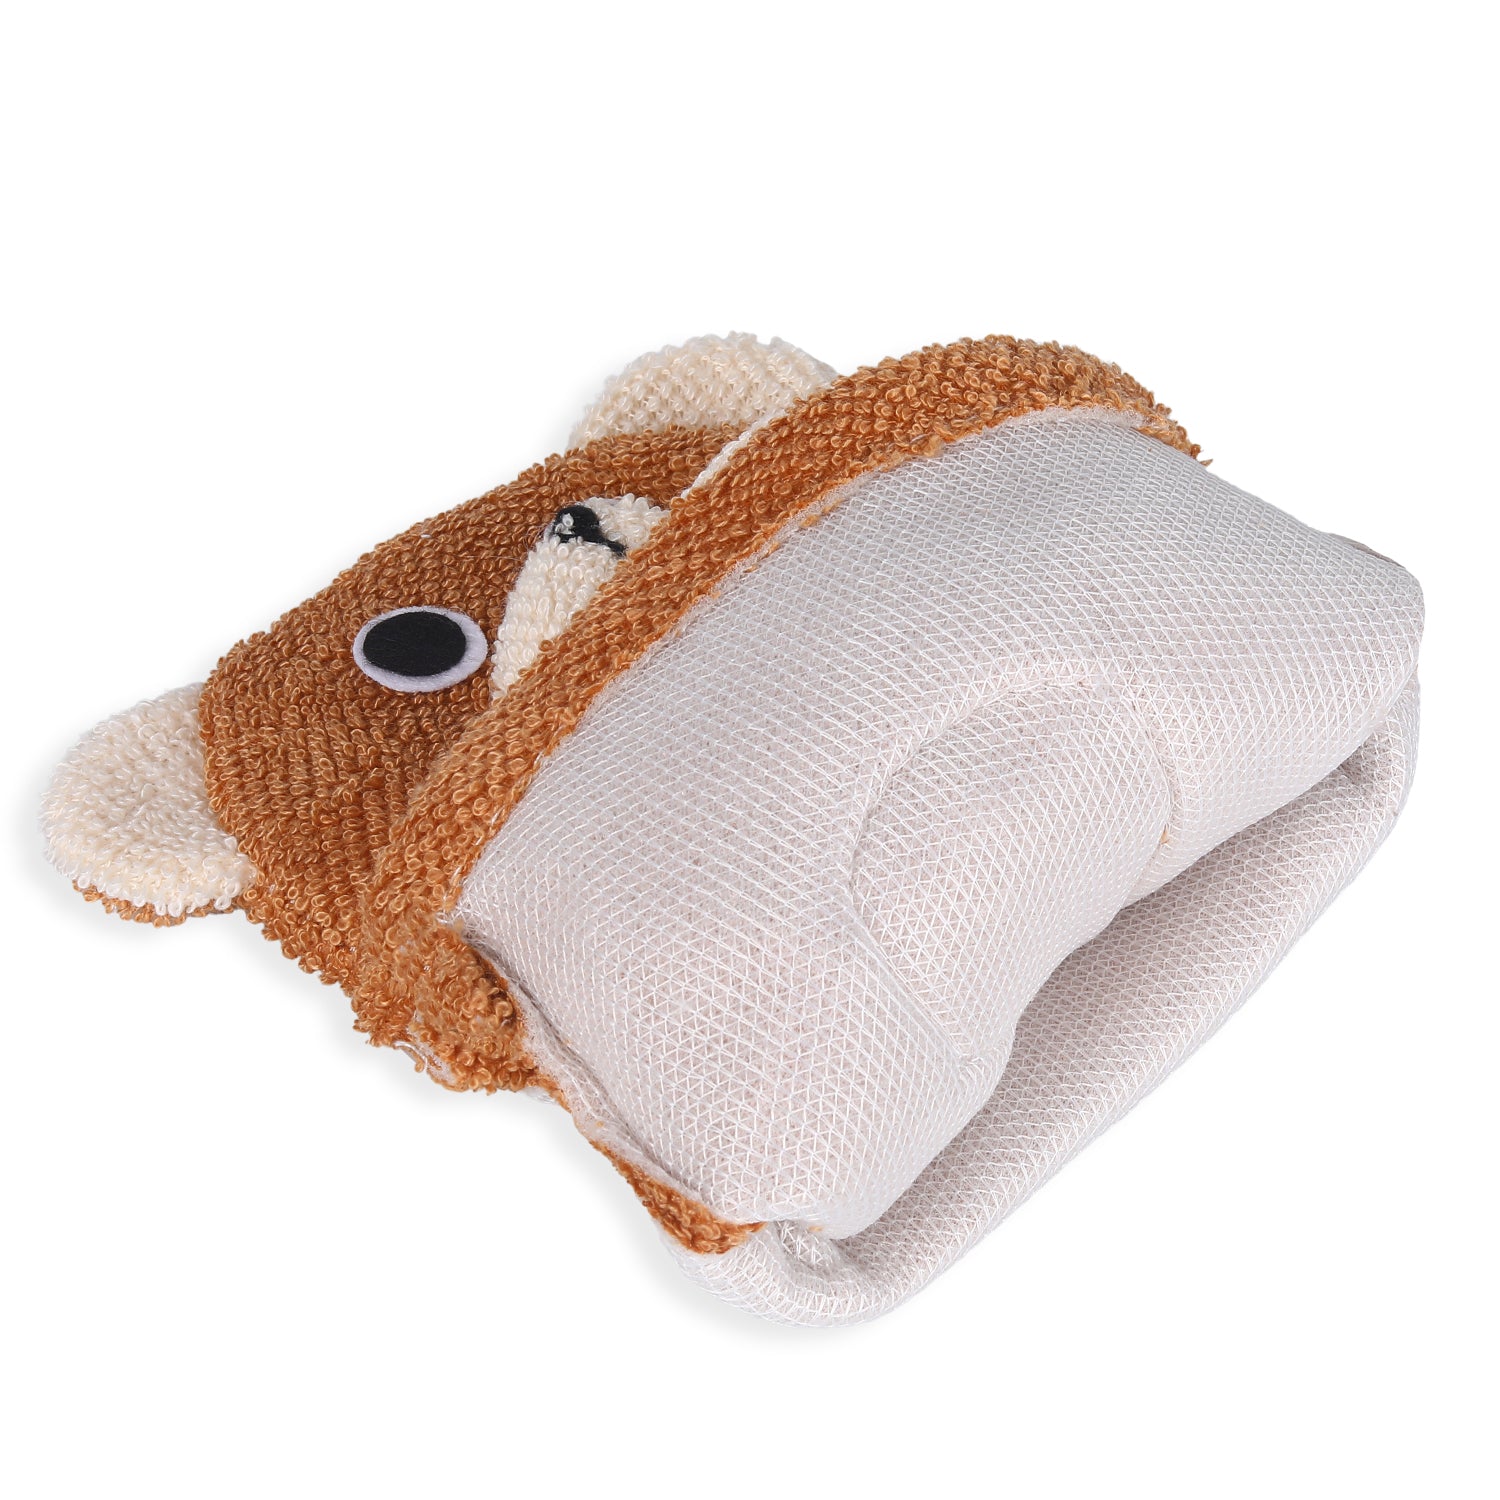 Baby Moo BFF Bear Bath Time Fun Hand Puppet Loofah Bath Glove - Brown